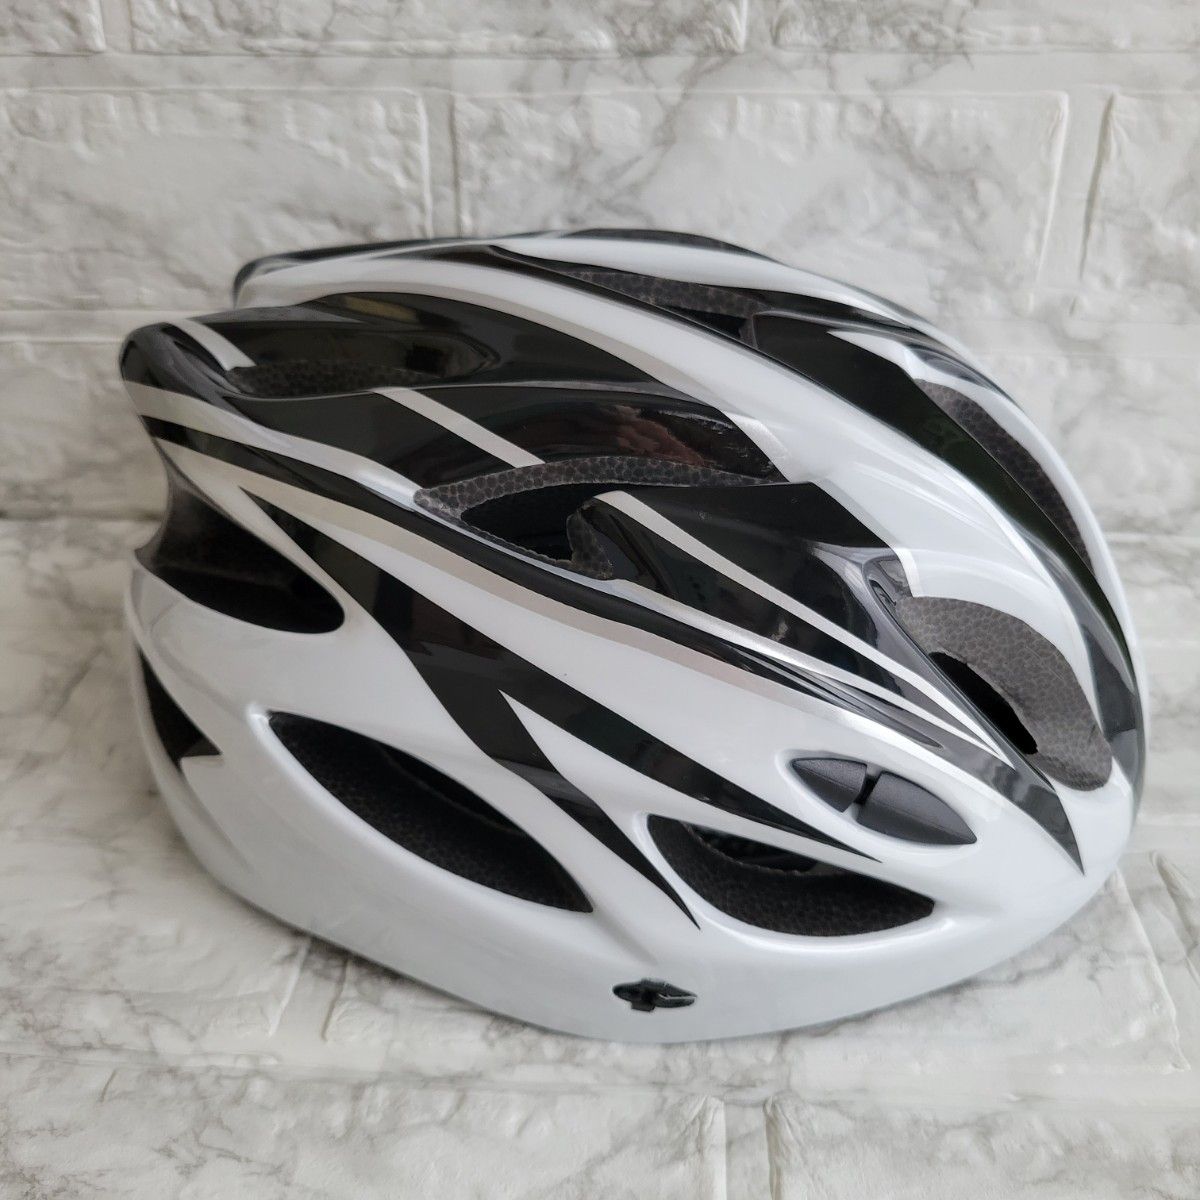 RIHE 自転車 ヘルメット 大人 高剛性 サイクリング 通勤 通学 安全 軽量 通気 流線型 自転車用ヘルメット